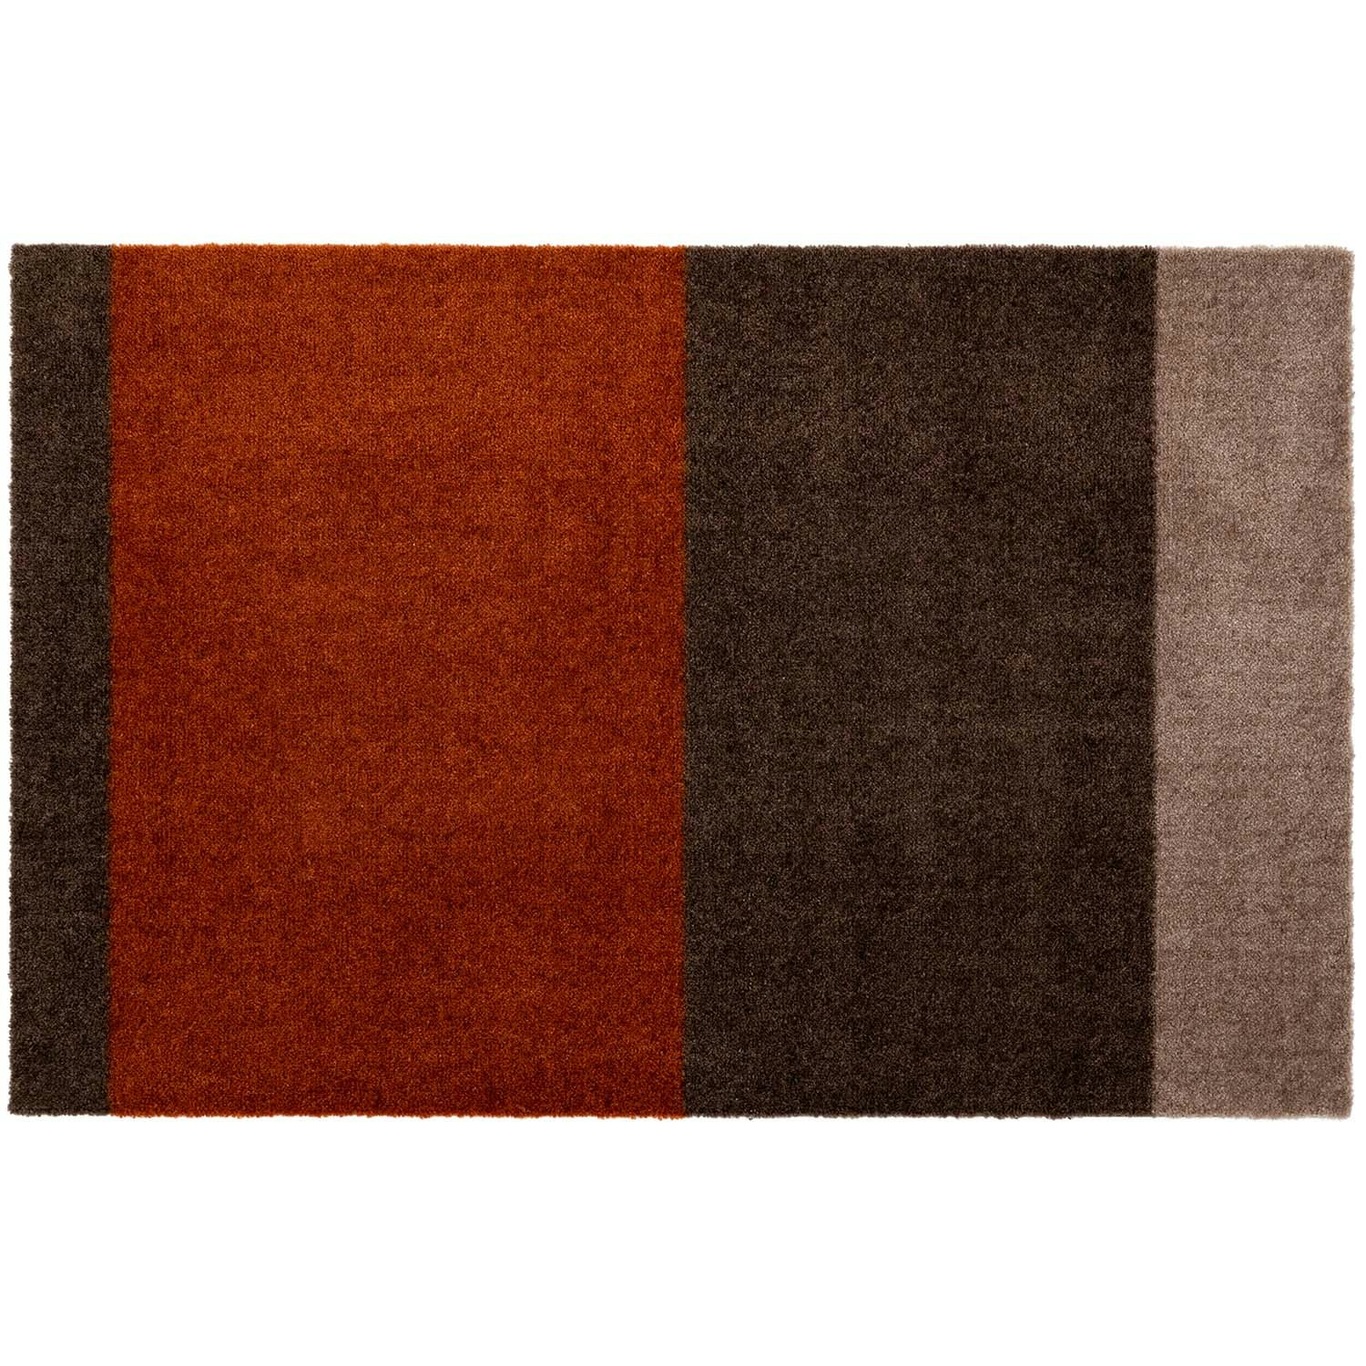 Stripes Teppich Sandfarben/Terracotta, 60x90 cm